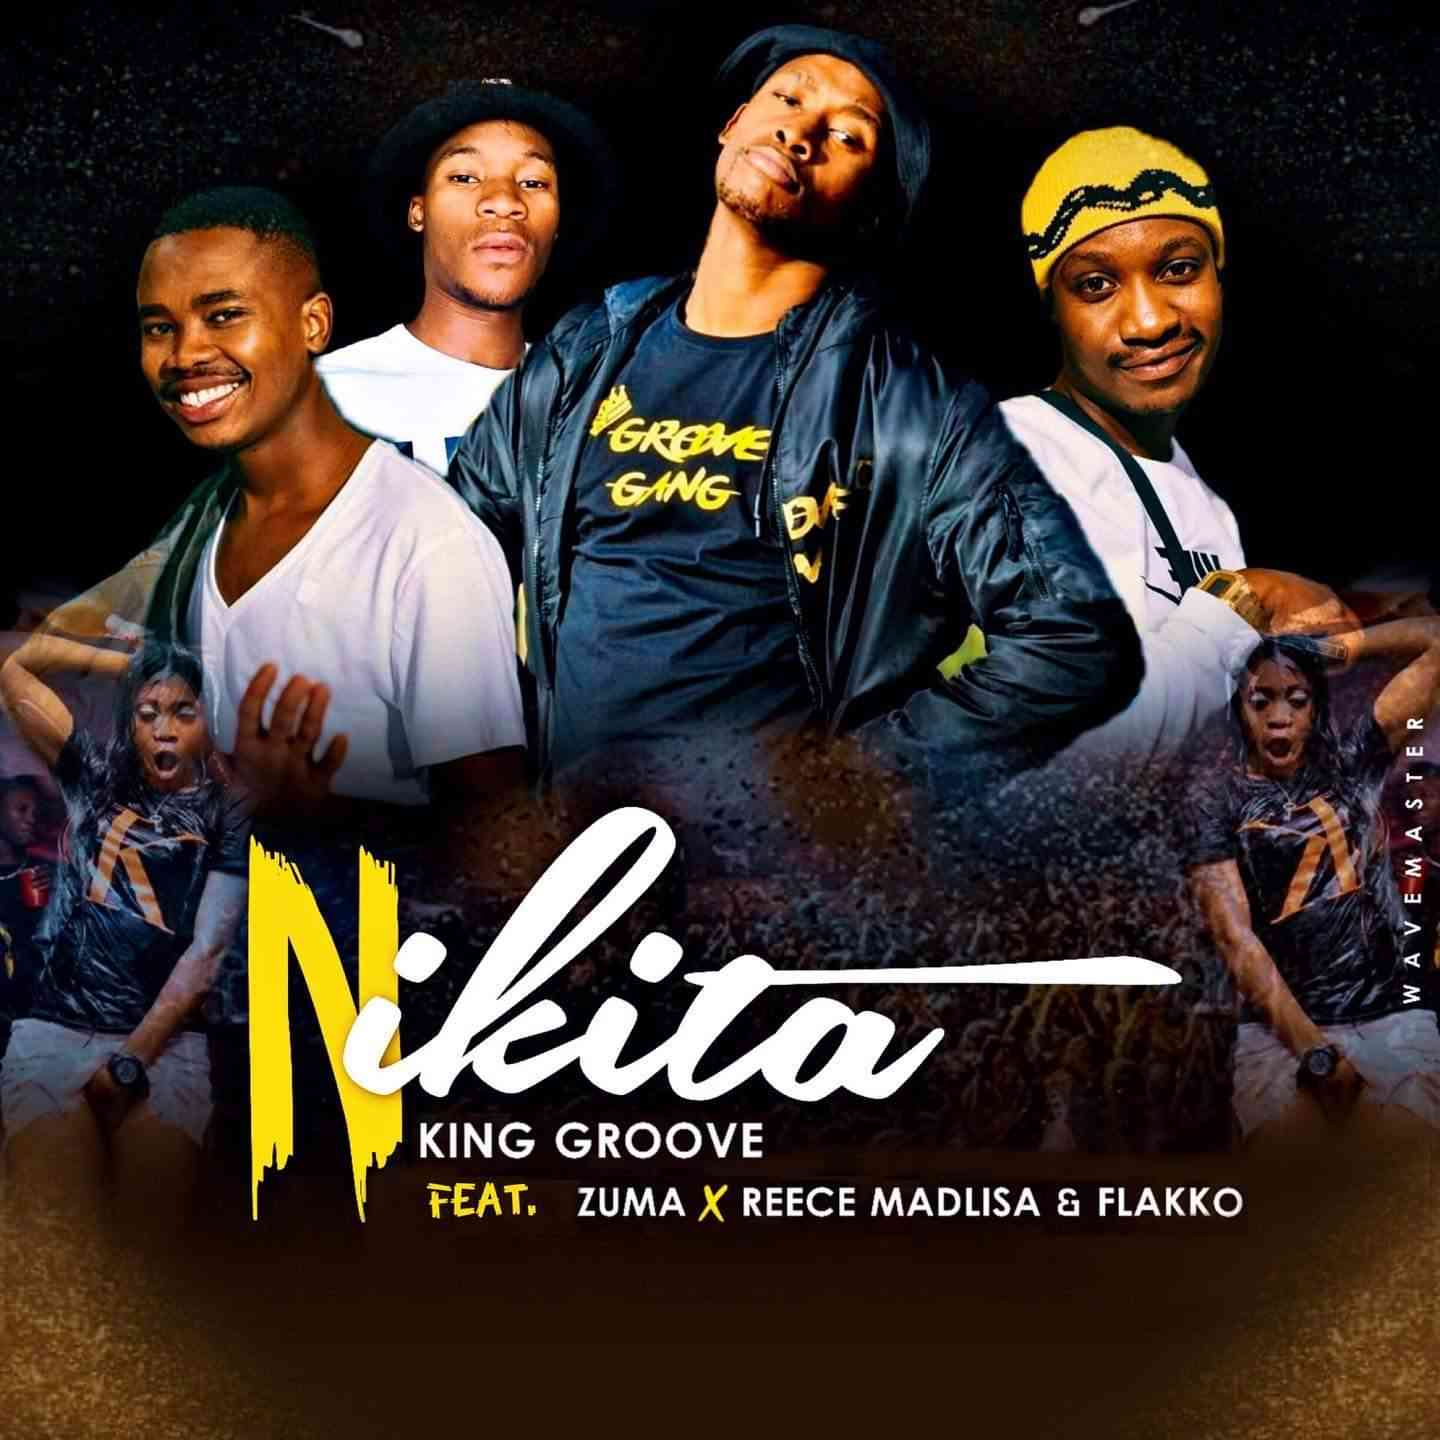 King Groove Nikita ft. Zuma, Reece Madlisa & Flakko